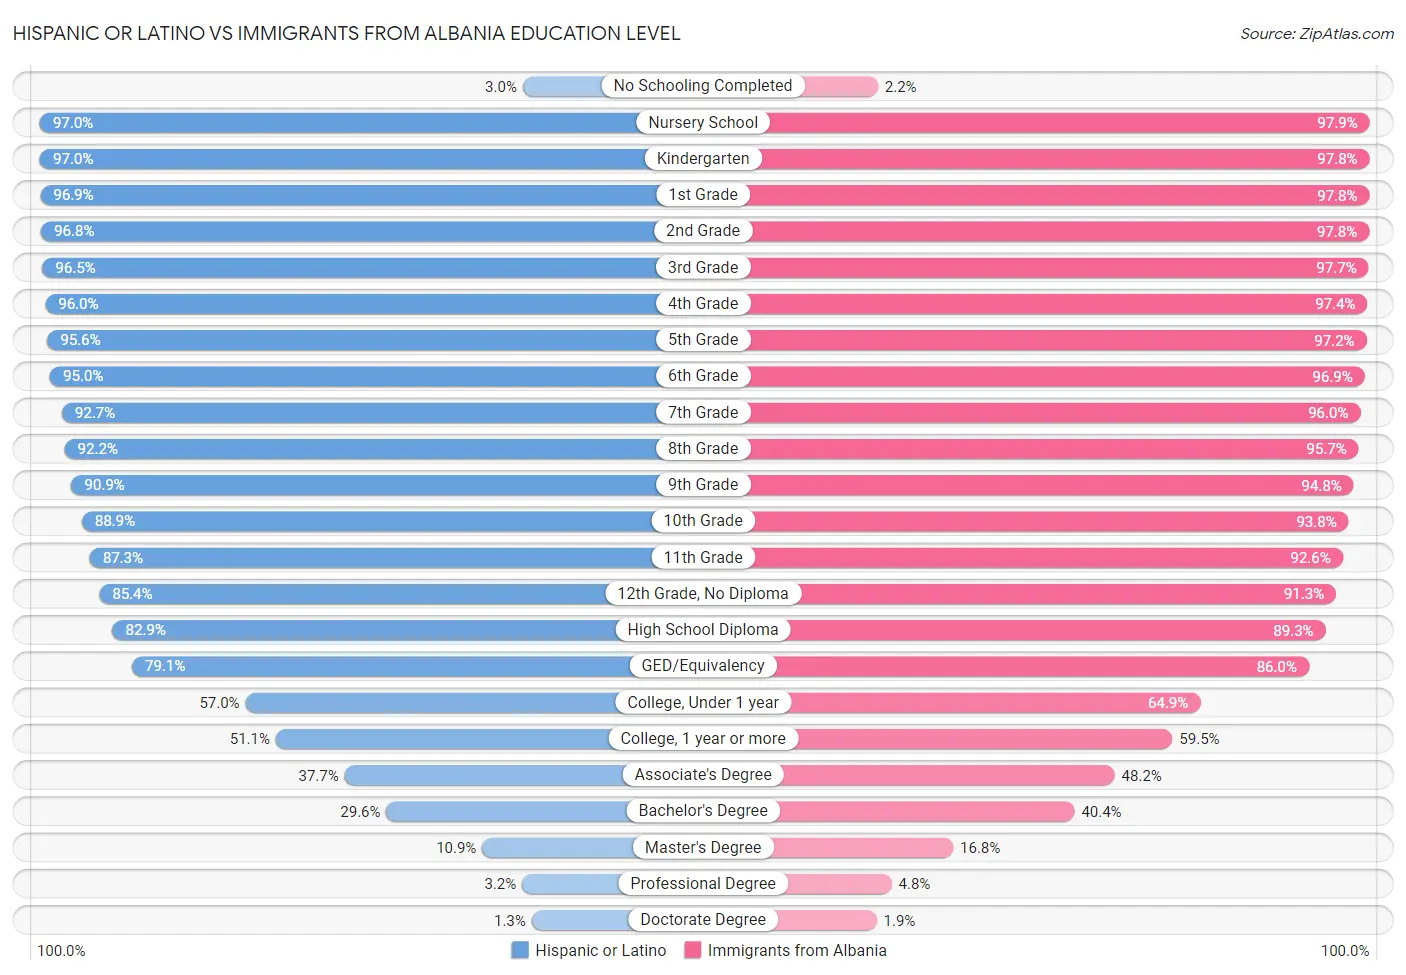 Hispanic or Latino vs Immigrants from Albania Education Level